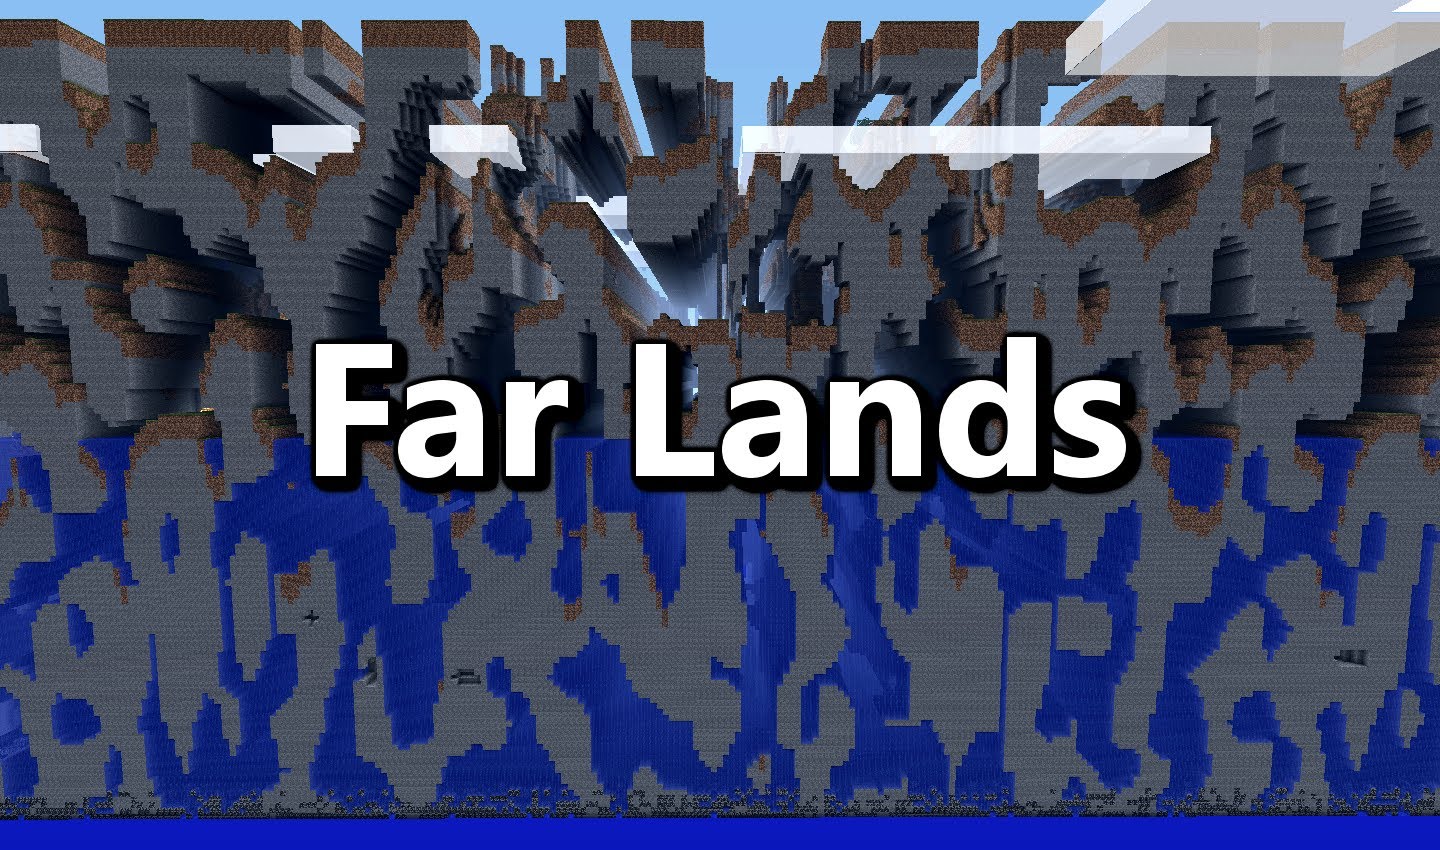 Farlands #24